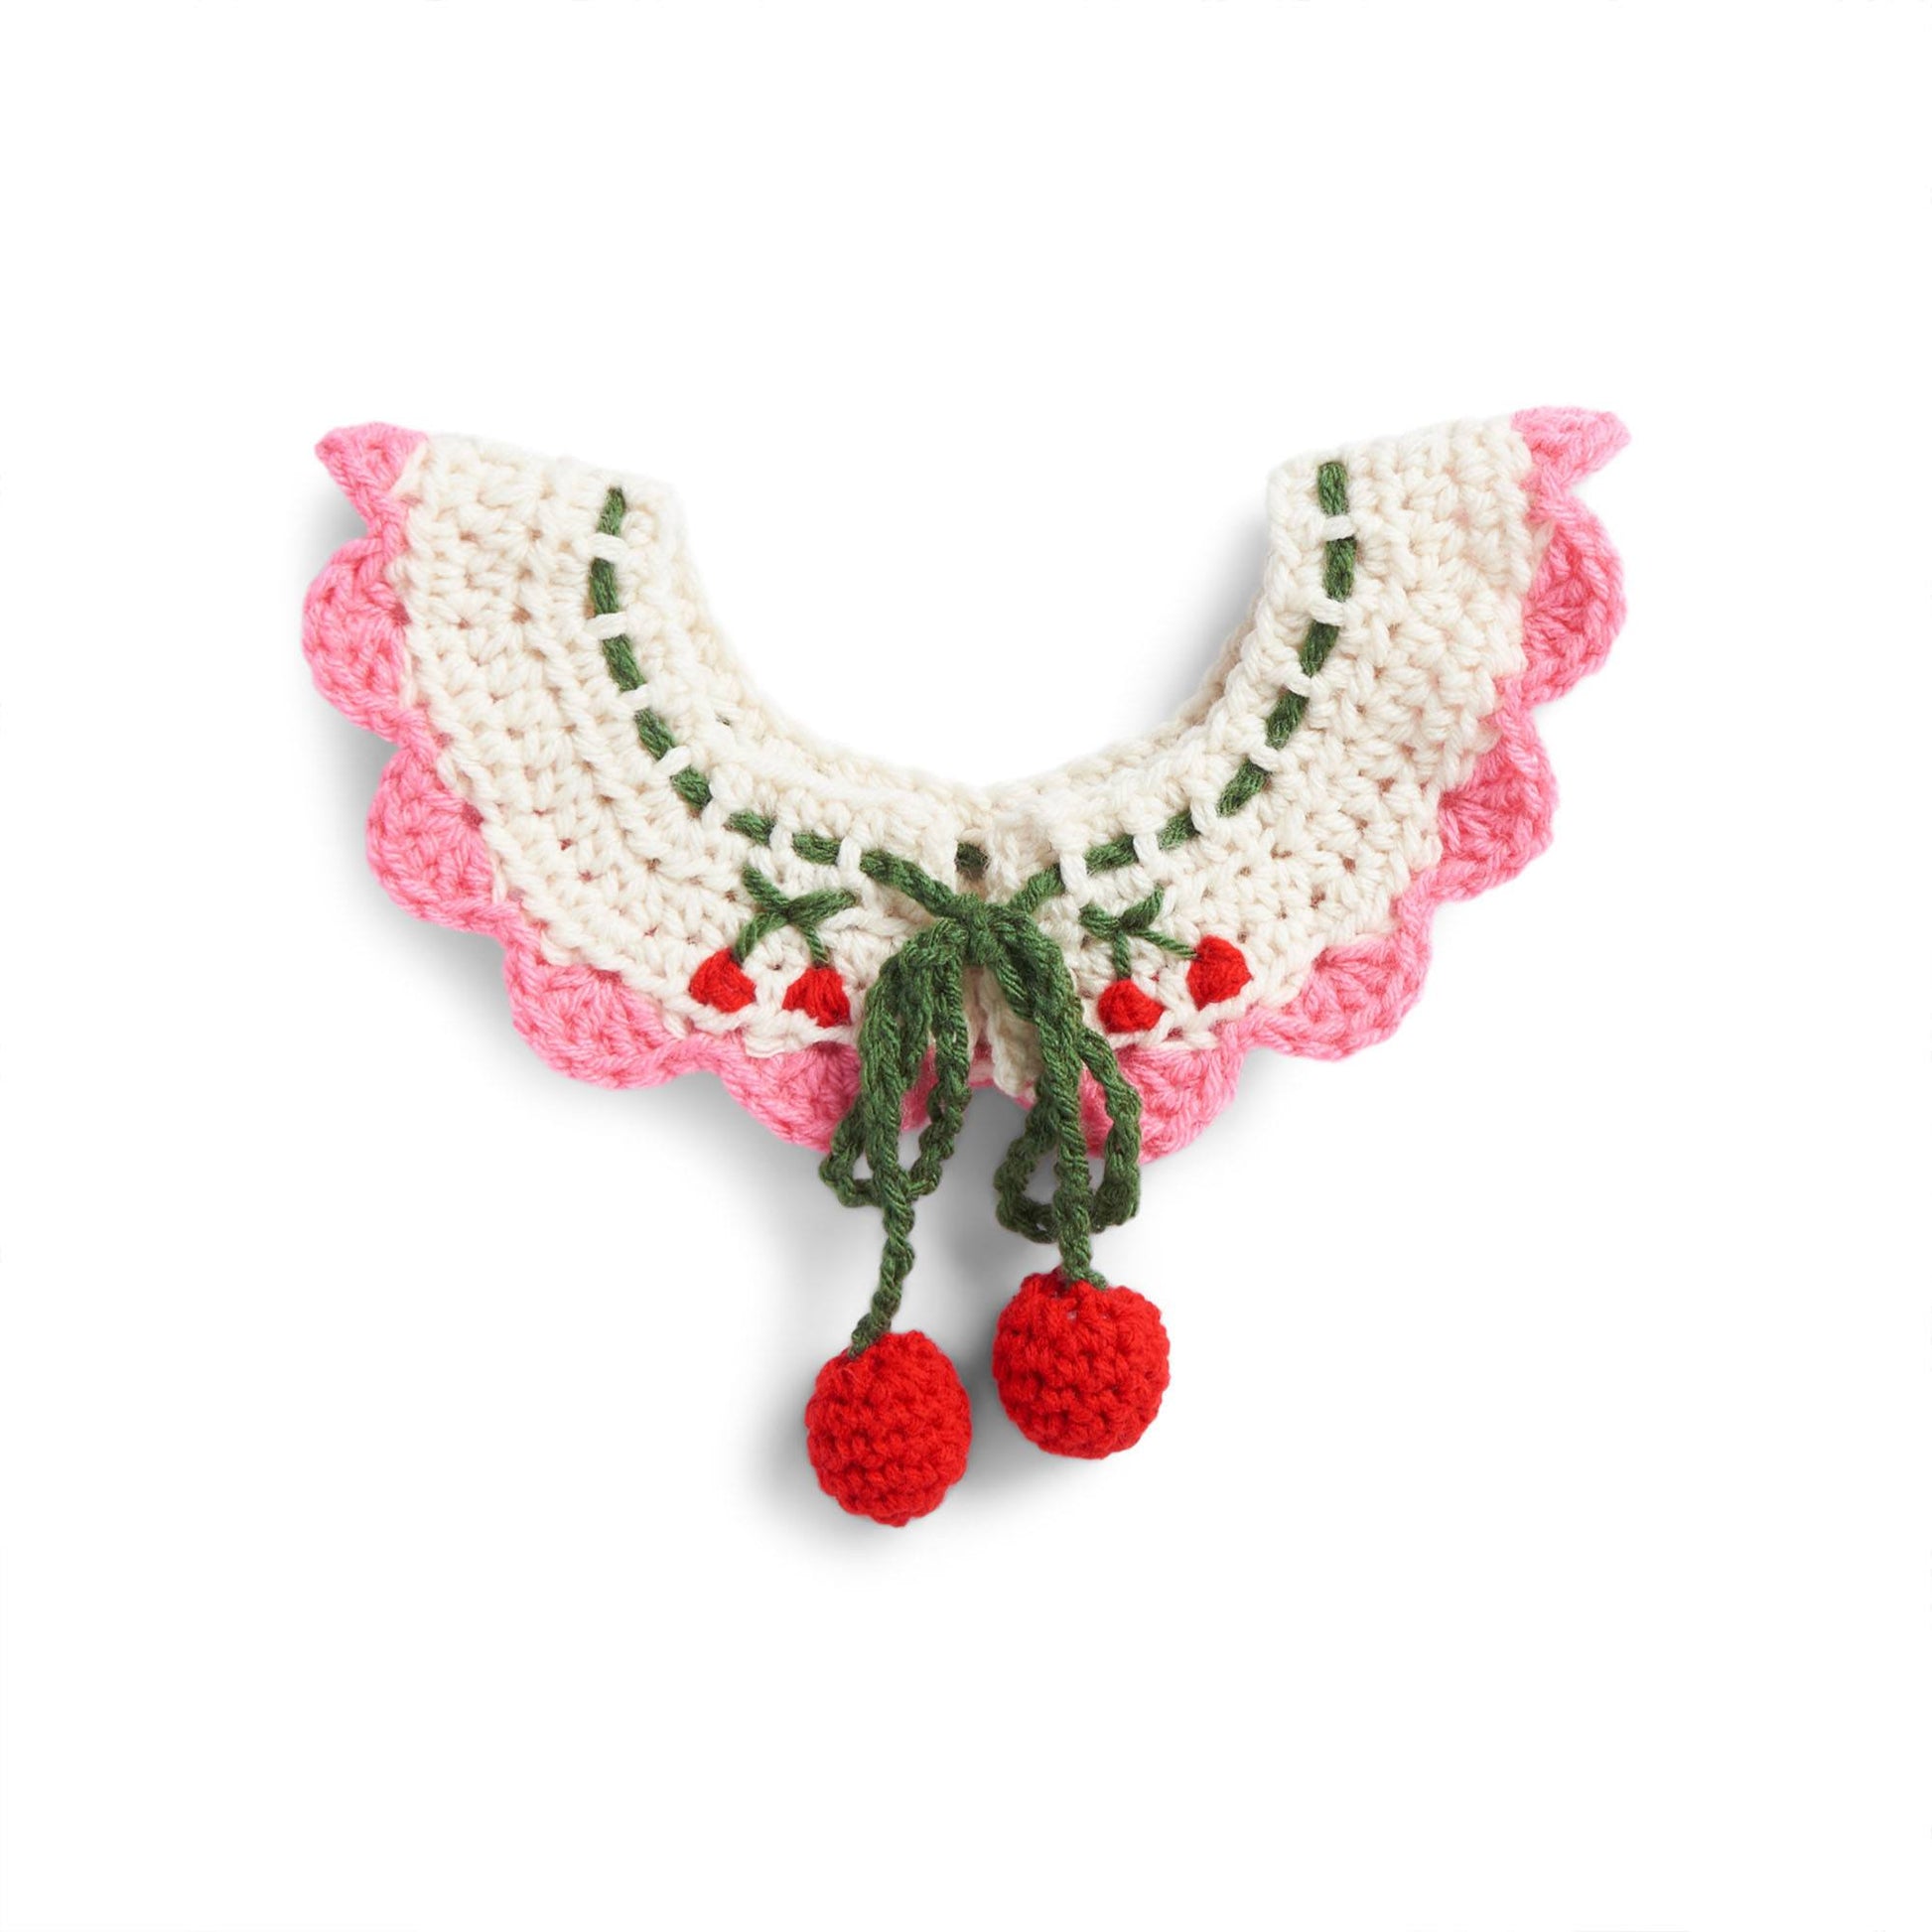 Free Red Heart Cheery Cherry Crochet Collar Pattern